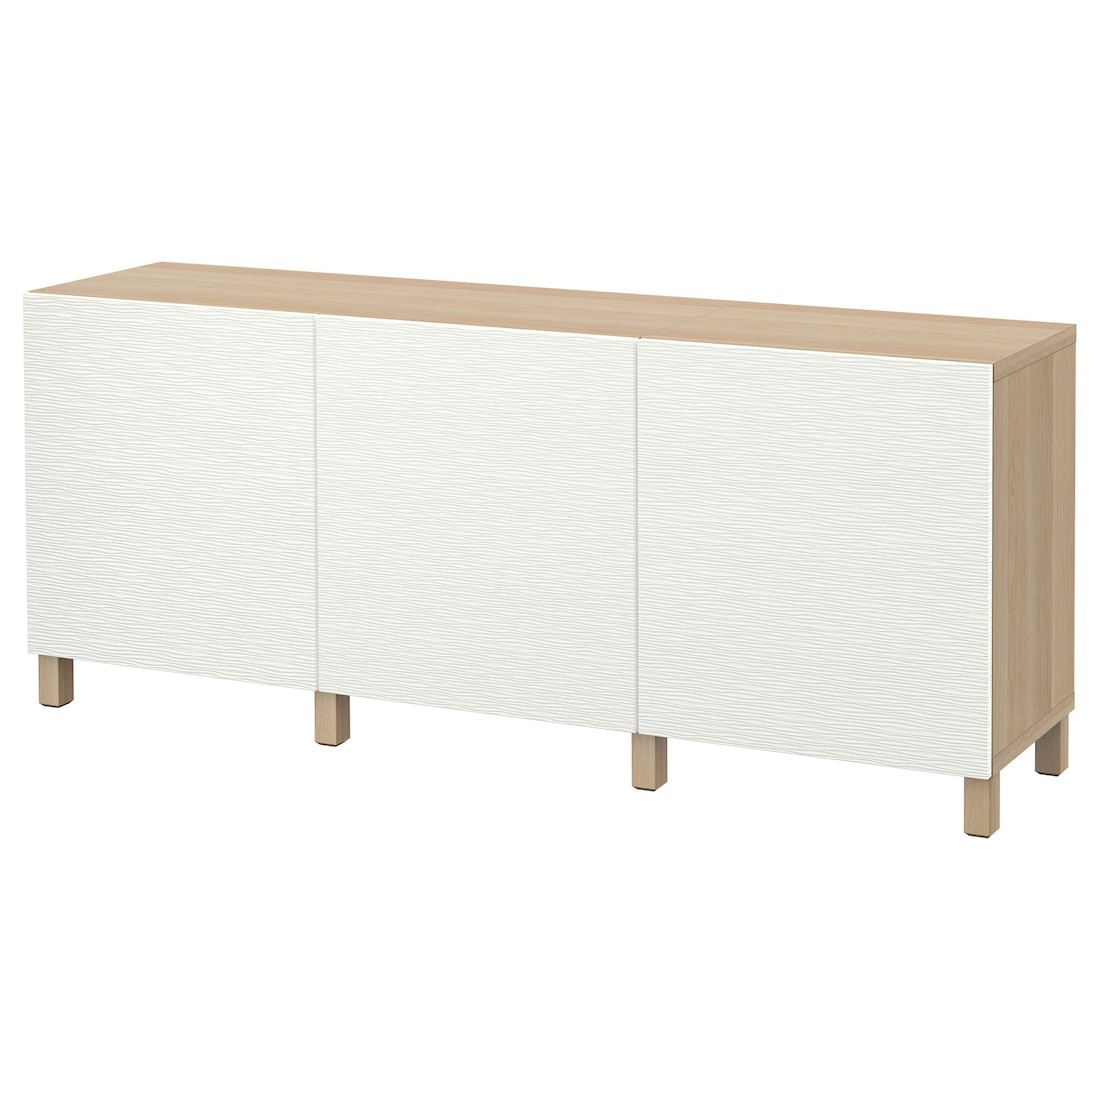 IKEA BESTÅ БЕСТО Комбинация для хранения с дверцами, под беленый дуб / Laxviken / Stubbarp белый, 180x42x74 см 09139903 091.399.03